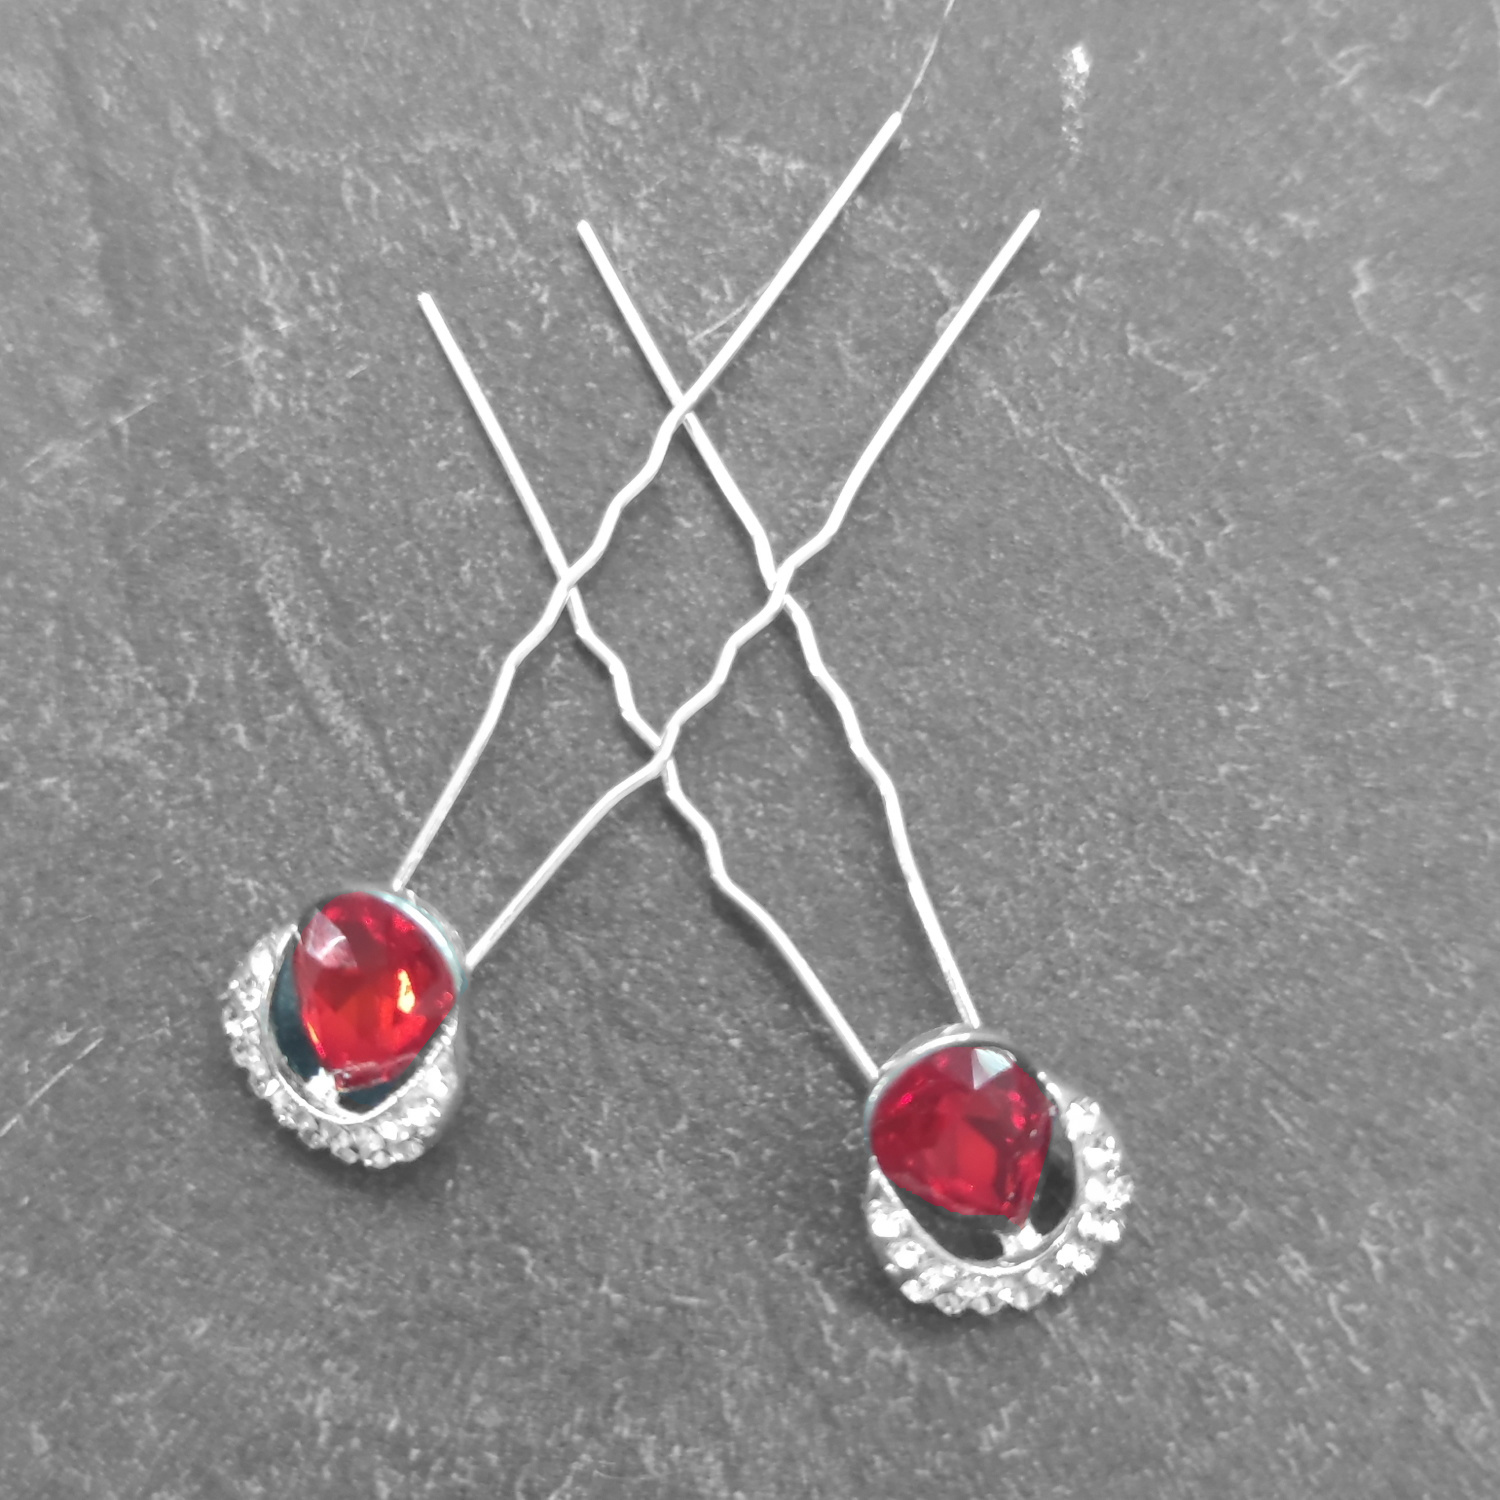 Mam Onhandig vermomming Zilverkleurige Hairpins – Rode Kristal - Diamantjes - 2 stuks - CJchoice.nl